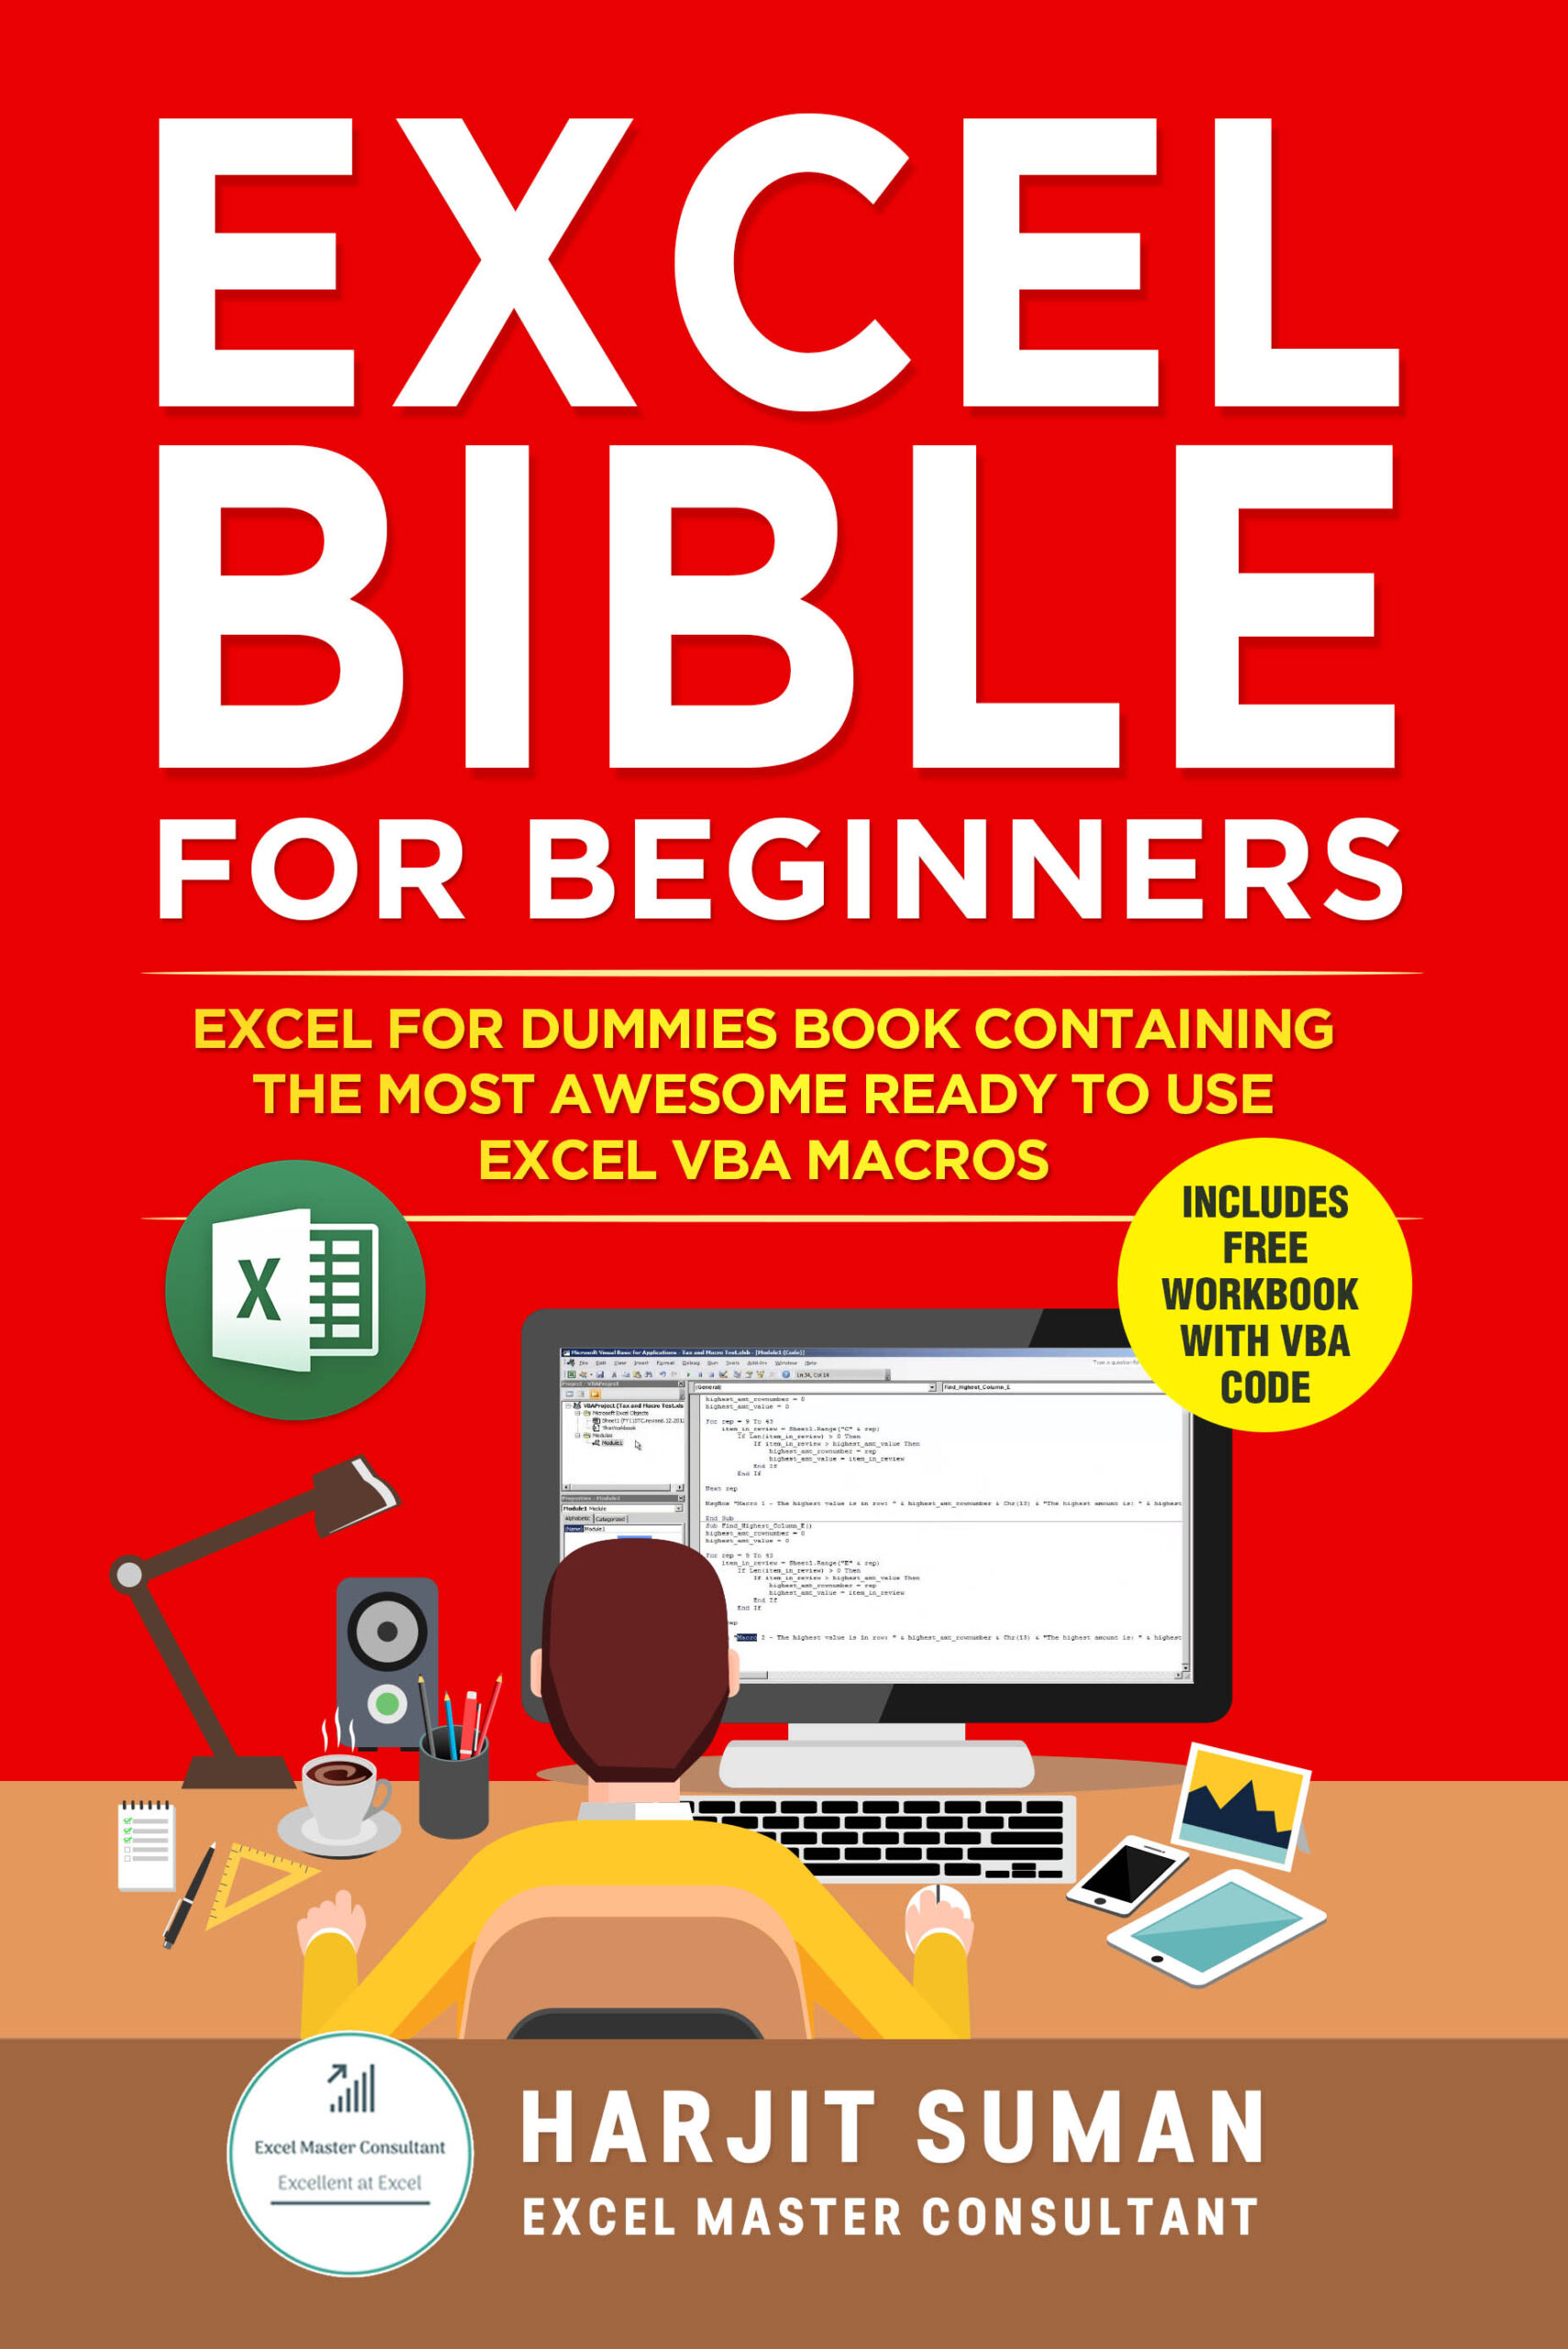 VBA for beginners book by Harjit Suman